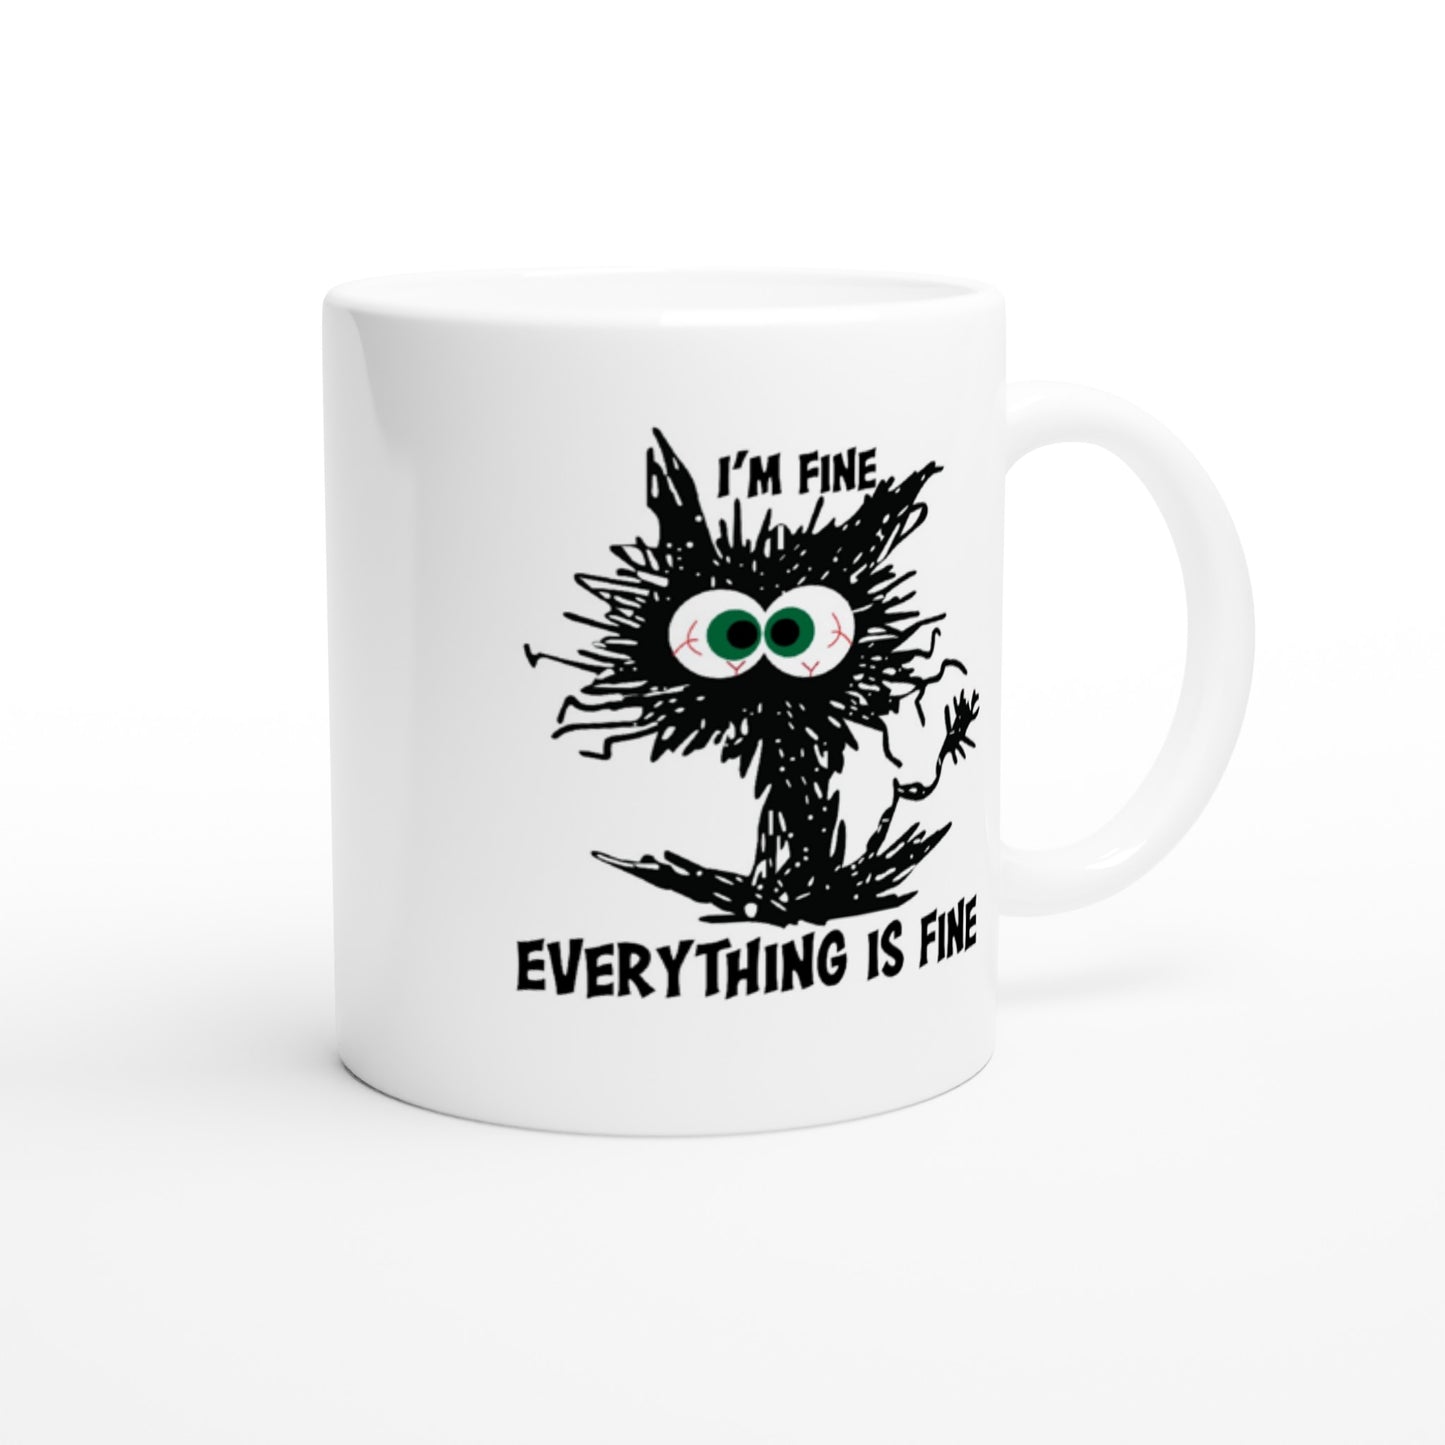 I'm Fine, Everything is Fine - White 11oz Ceramic Mug - Mister Snarky's